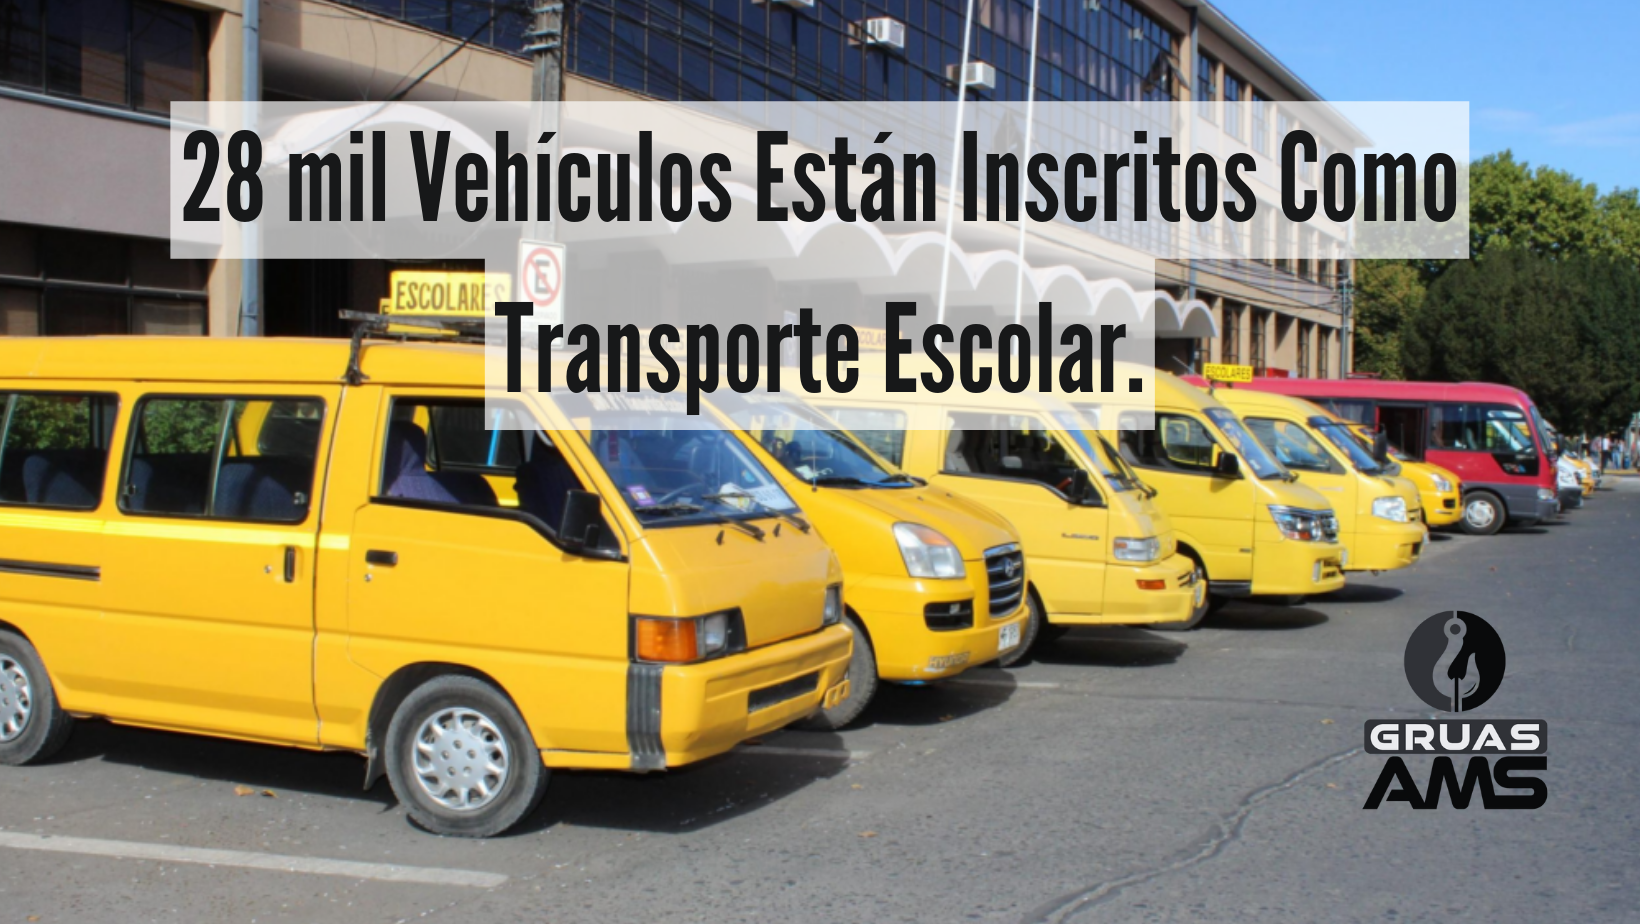 28 mil Vehículos Están Inscritos Como Transporte Escolar.